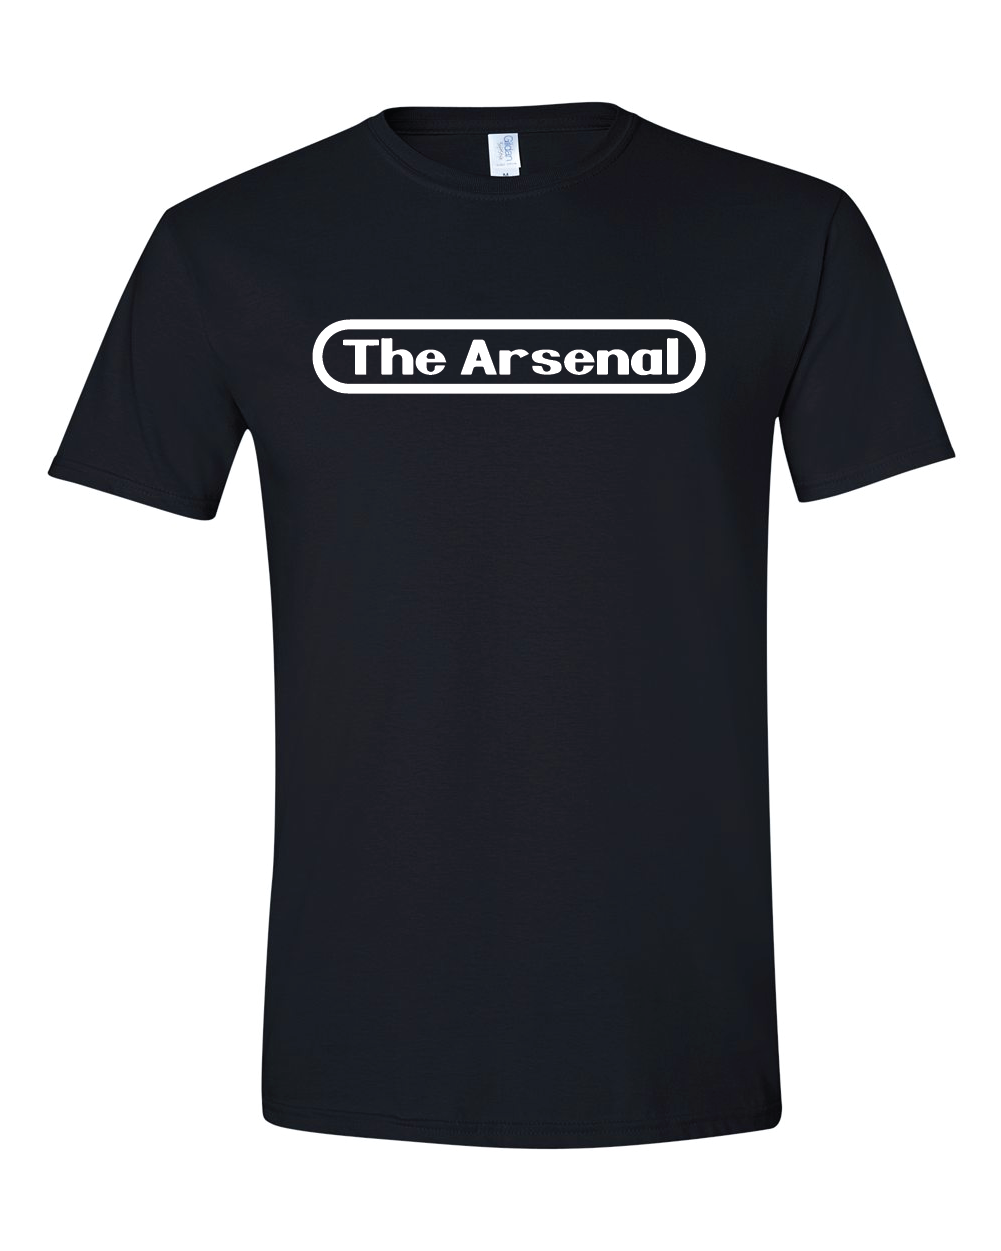 Nintendo Arsenal Shirt The Arsenal $10.00